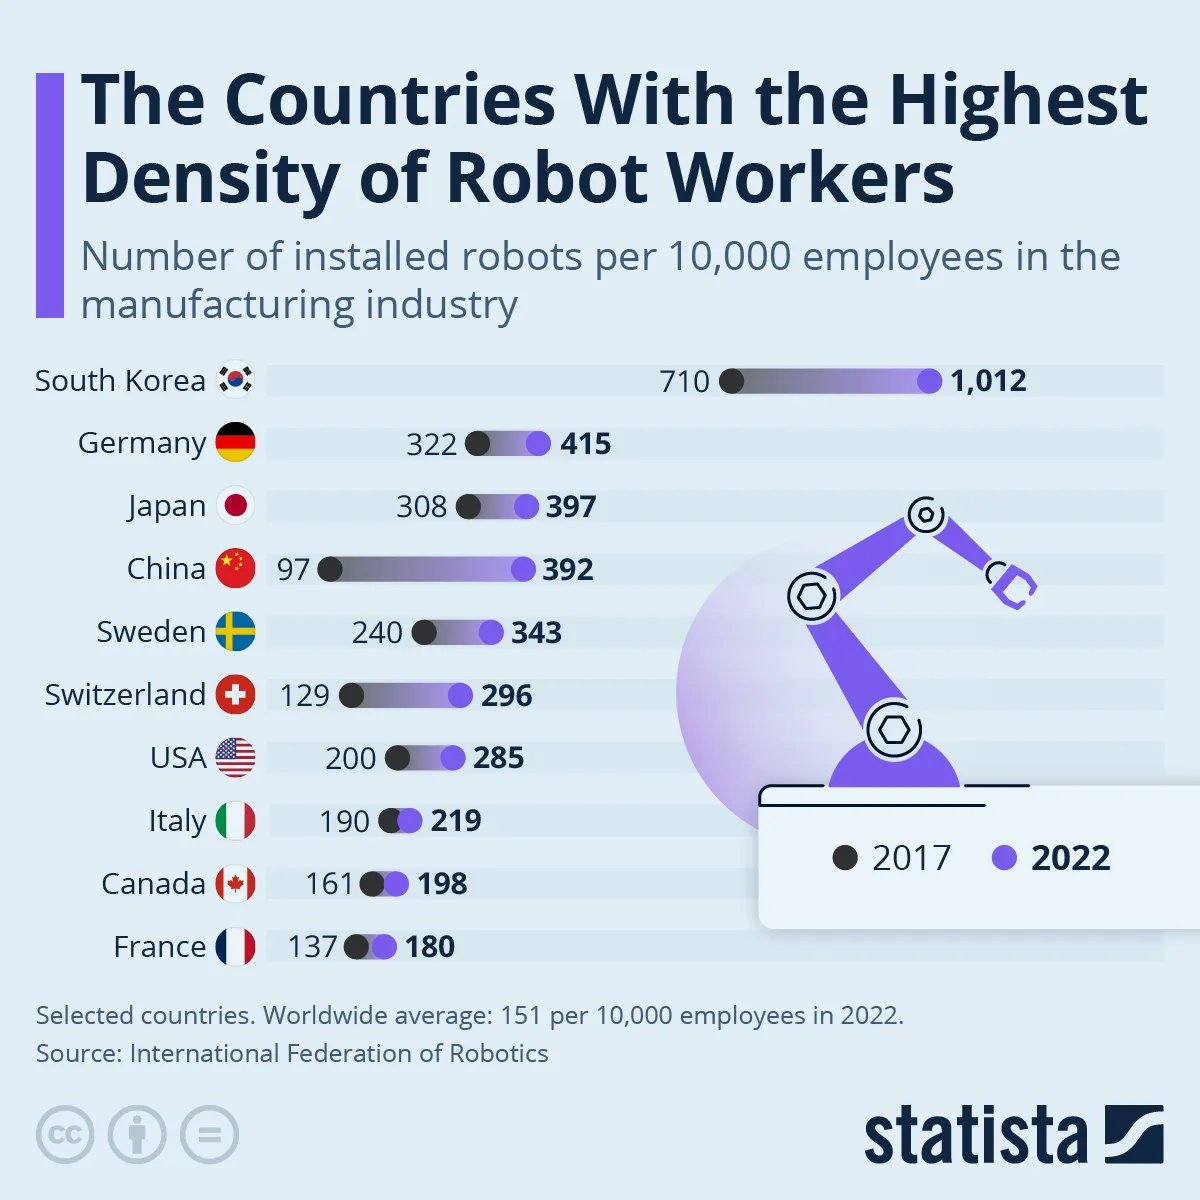 Countries with highest density of #robot workers - #futureofwork #automation @technicitymag 

@gvalan @DrFerdowsi @junjudapi @enricomolinari @avrohomg @kuriharan @fogle_shane @JolaBurnett @techpearce2 @drhiot @JohnMaynardCPA @mary_gambara @stanleychen0402 @pdpsingha